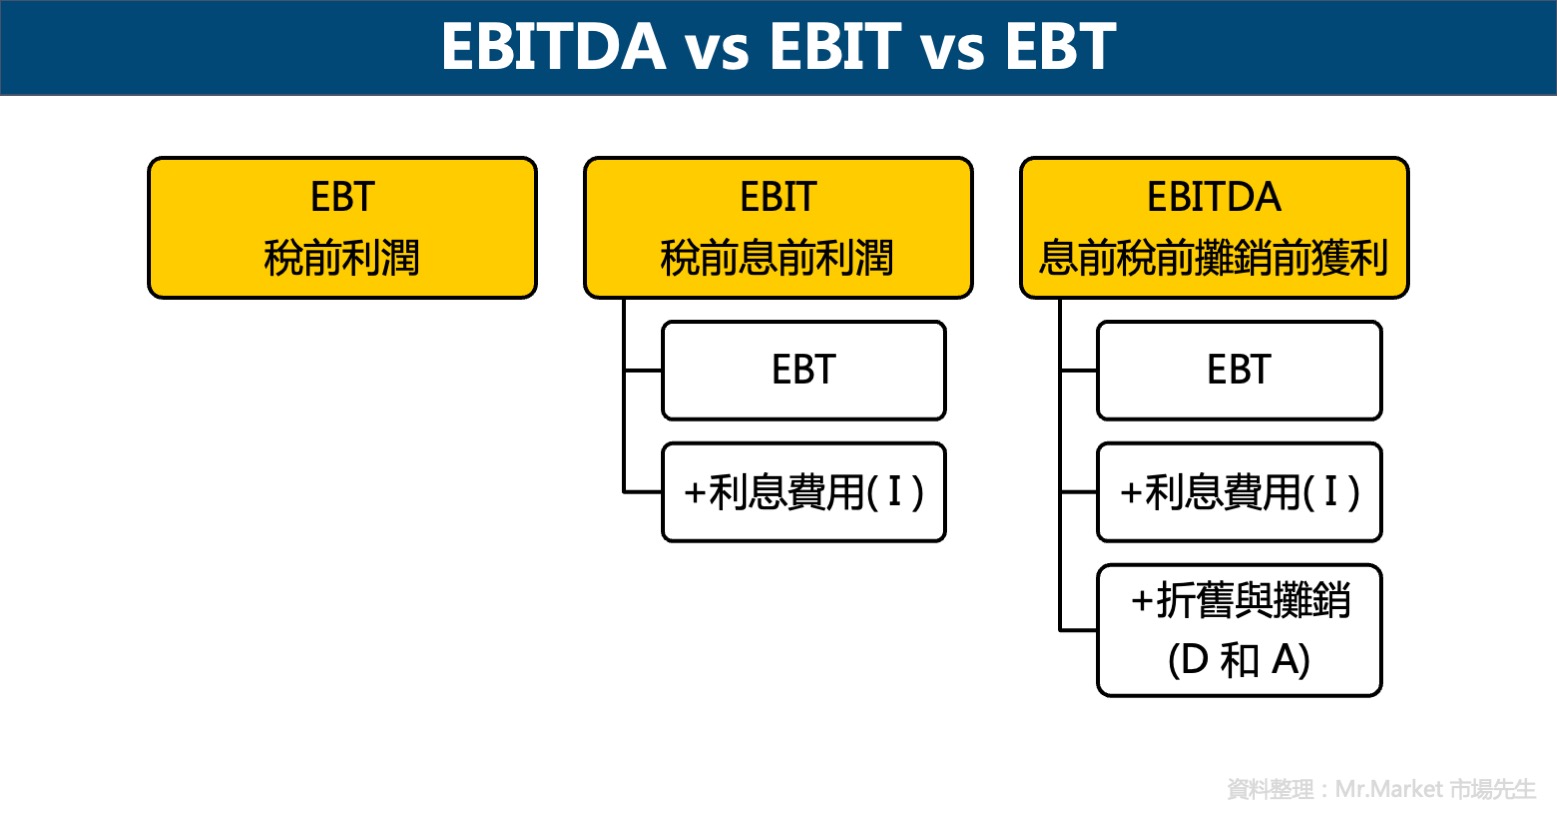 EBITDA vs EBIT vs EBT